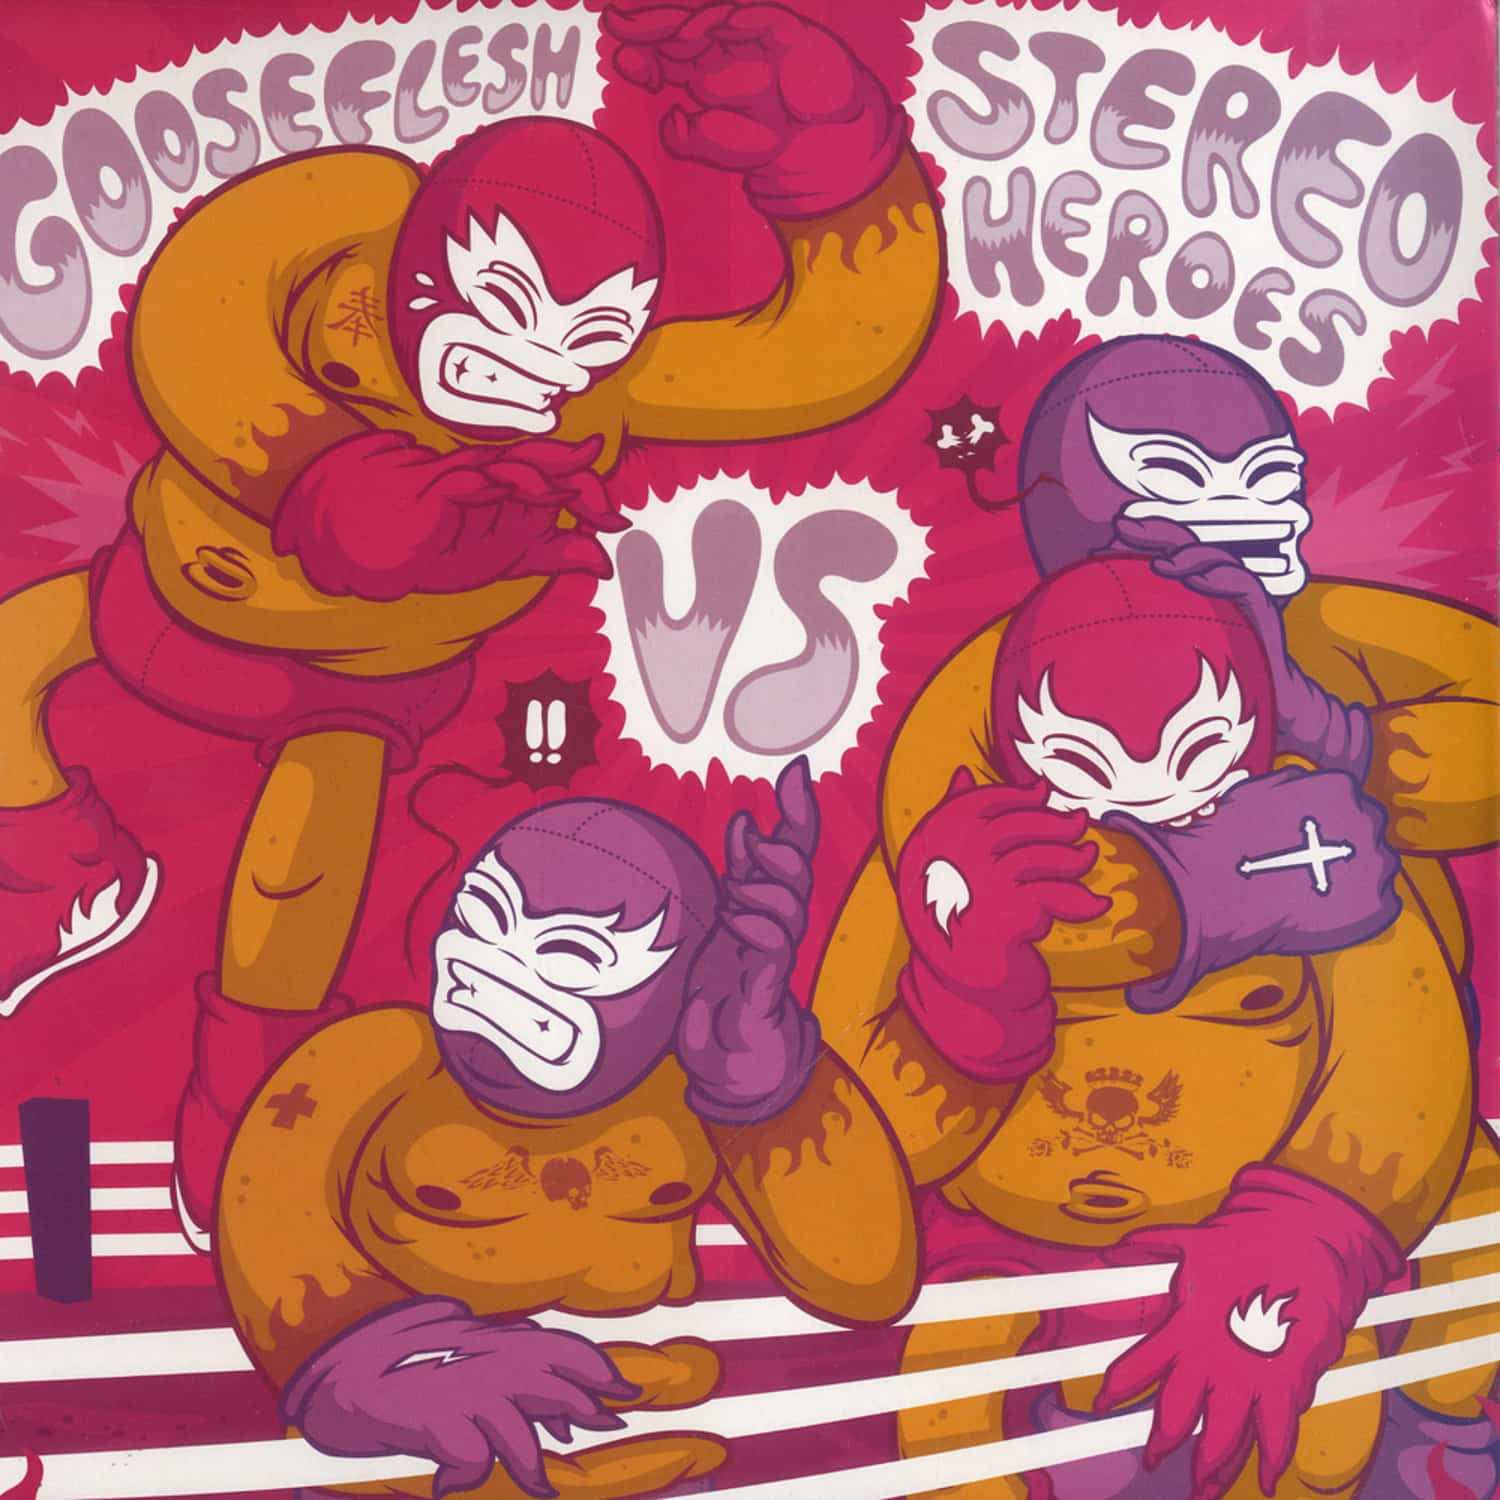 Stereo Heroes vs. Gooseflesh - AUDIO FIGHT EP